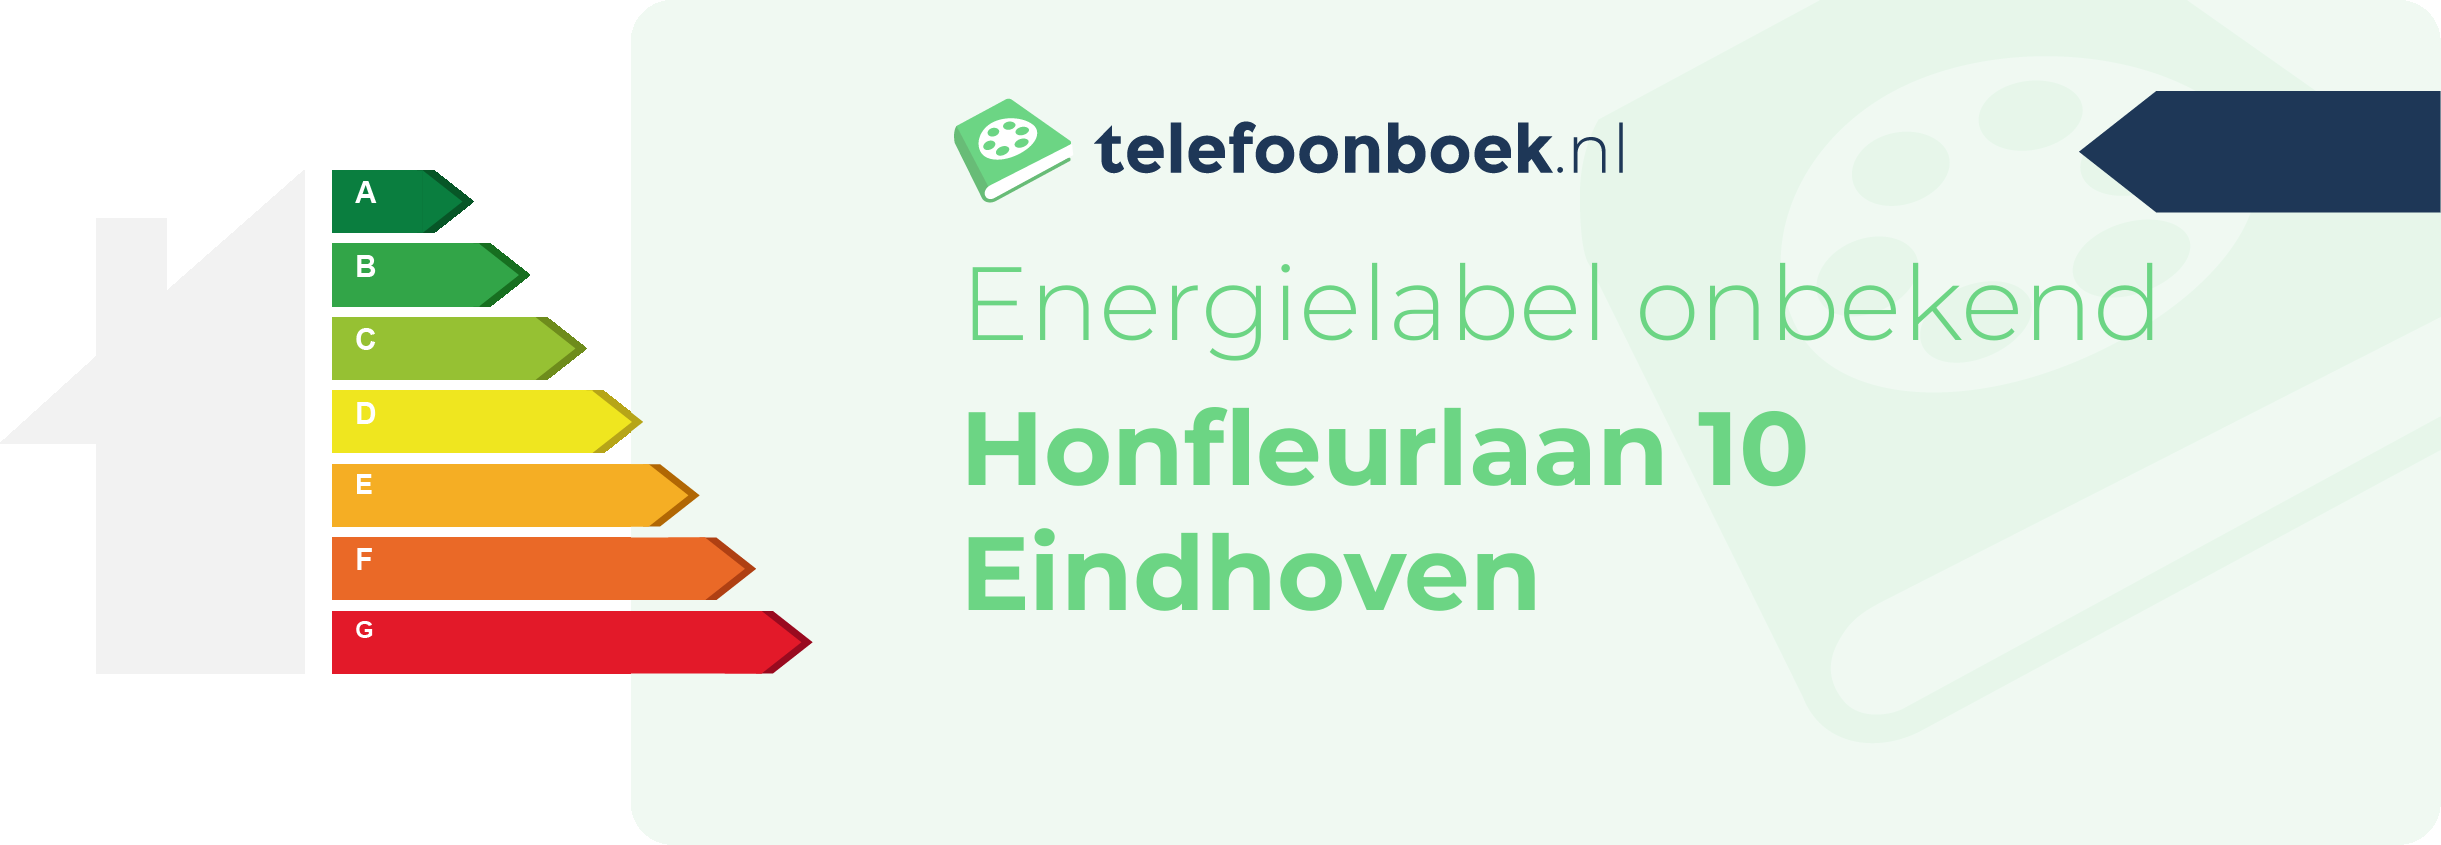 Energielabel Honfleurlaan 10 Eindhoven